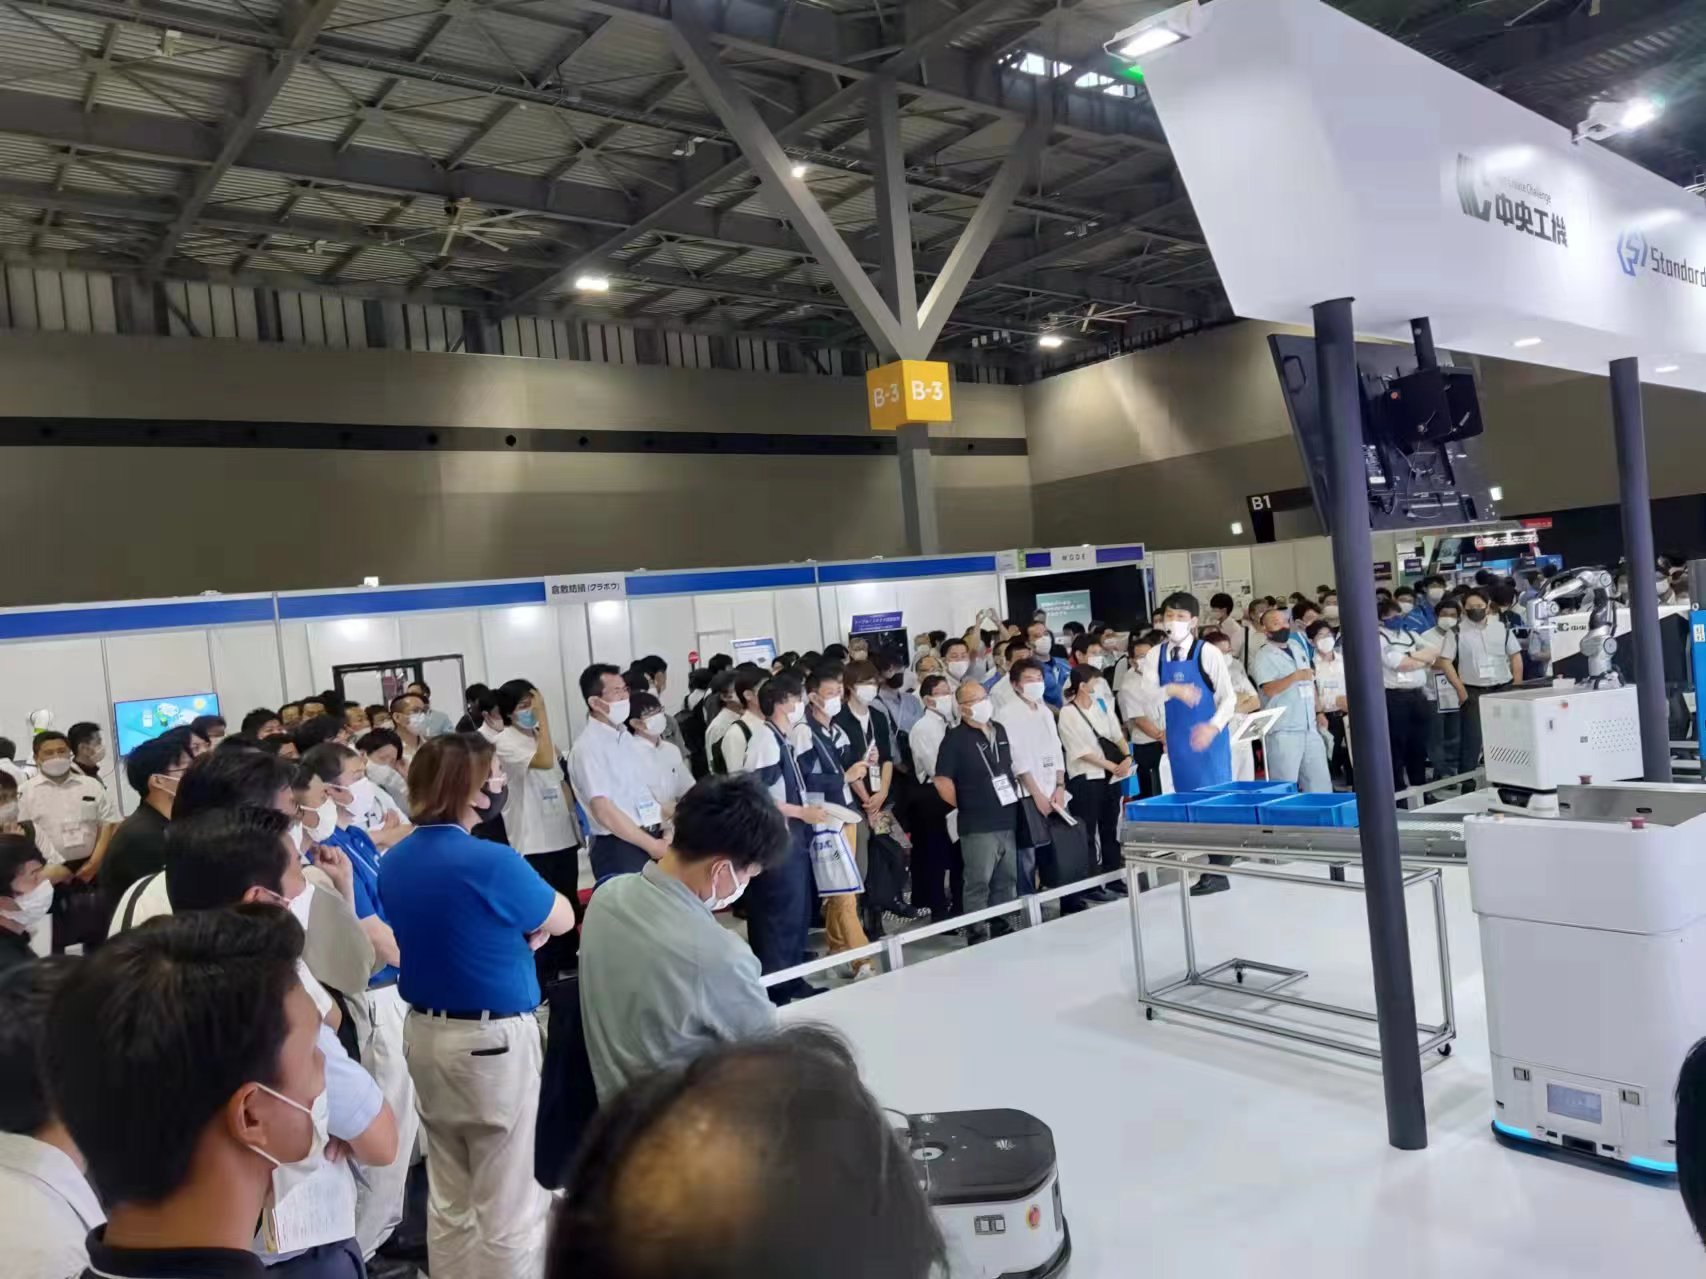 Robot Technology Japan 2022 | 斯坦德再次闪耀日本！